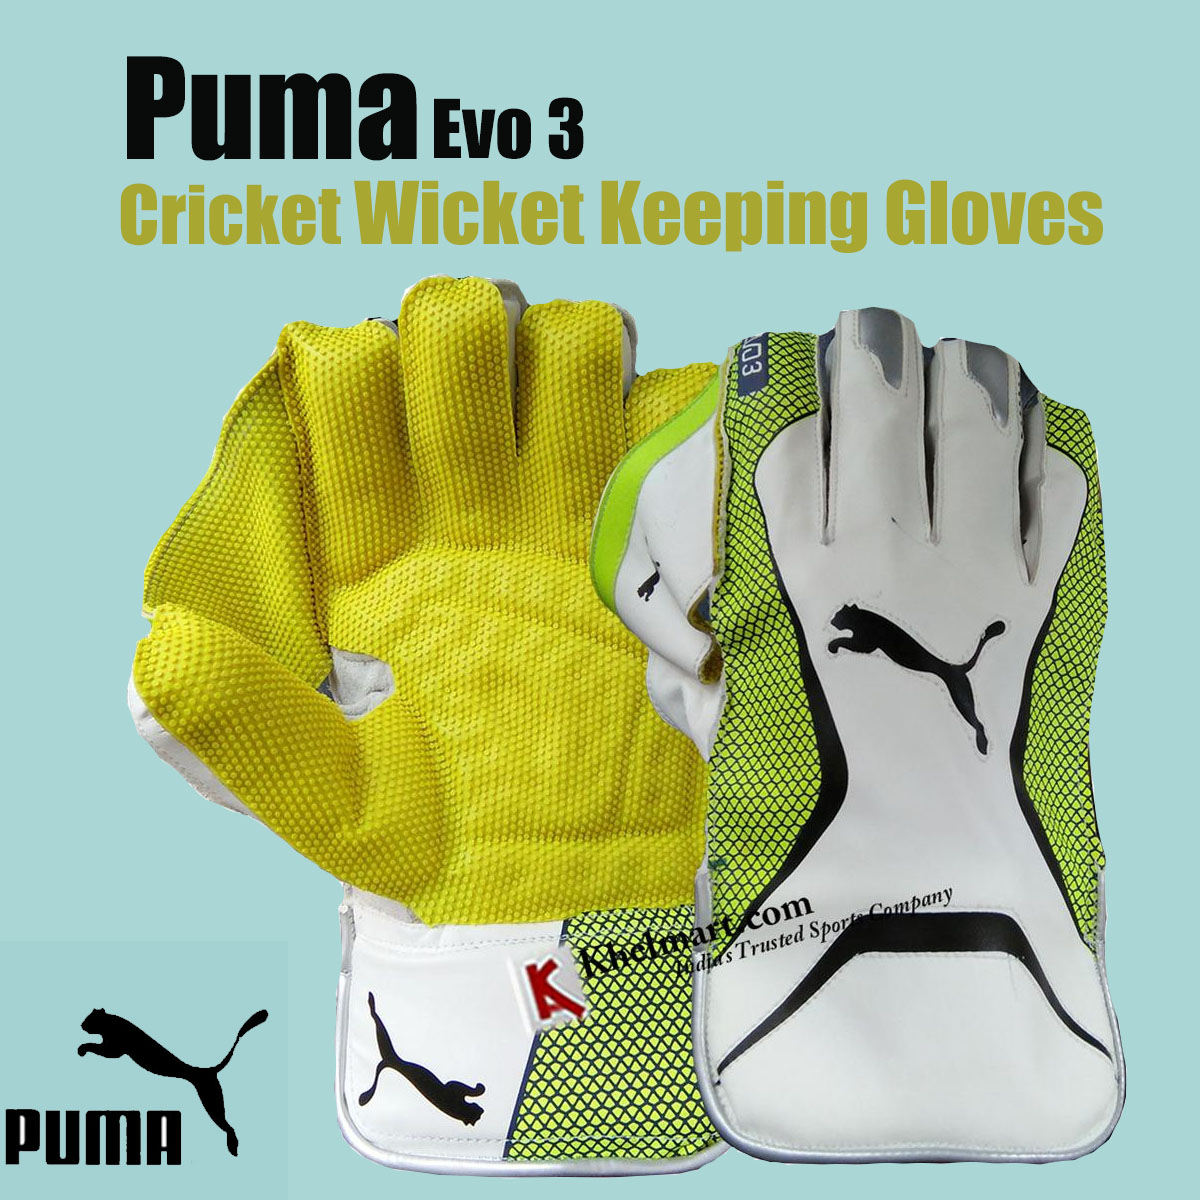 Puma_Evo_3_Wicket_Keeping_Gloves.jpg